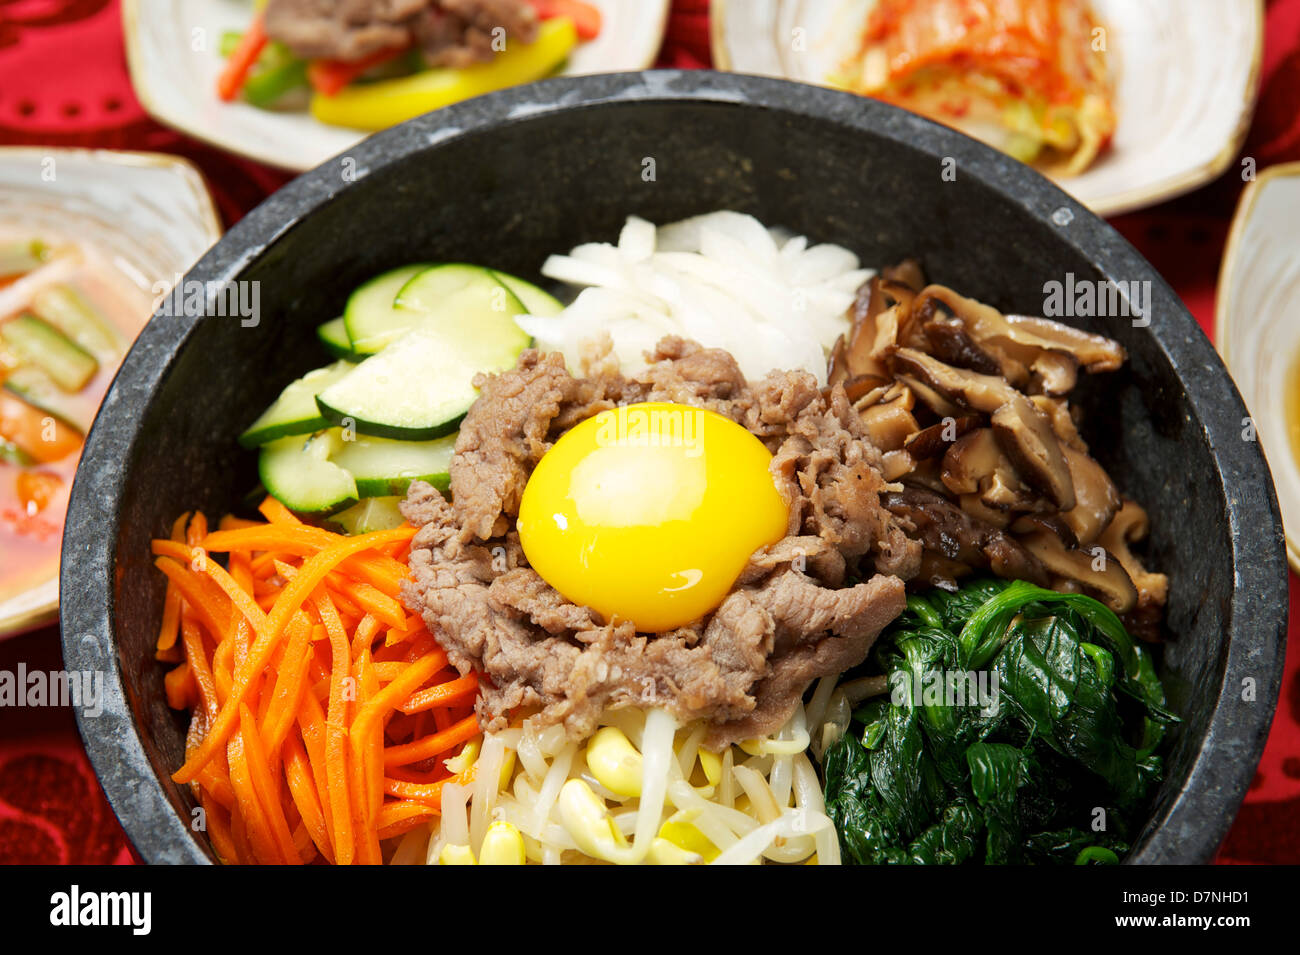 https://c8.alamy.com/comp/D7NHD1/korean-hot-pot-at-a-korean-restaurant-D7NHD1.jpg